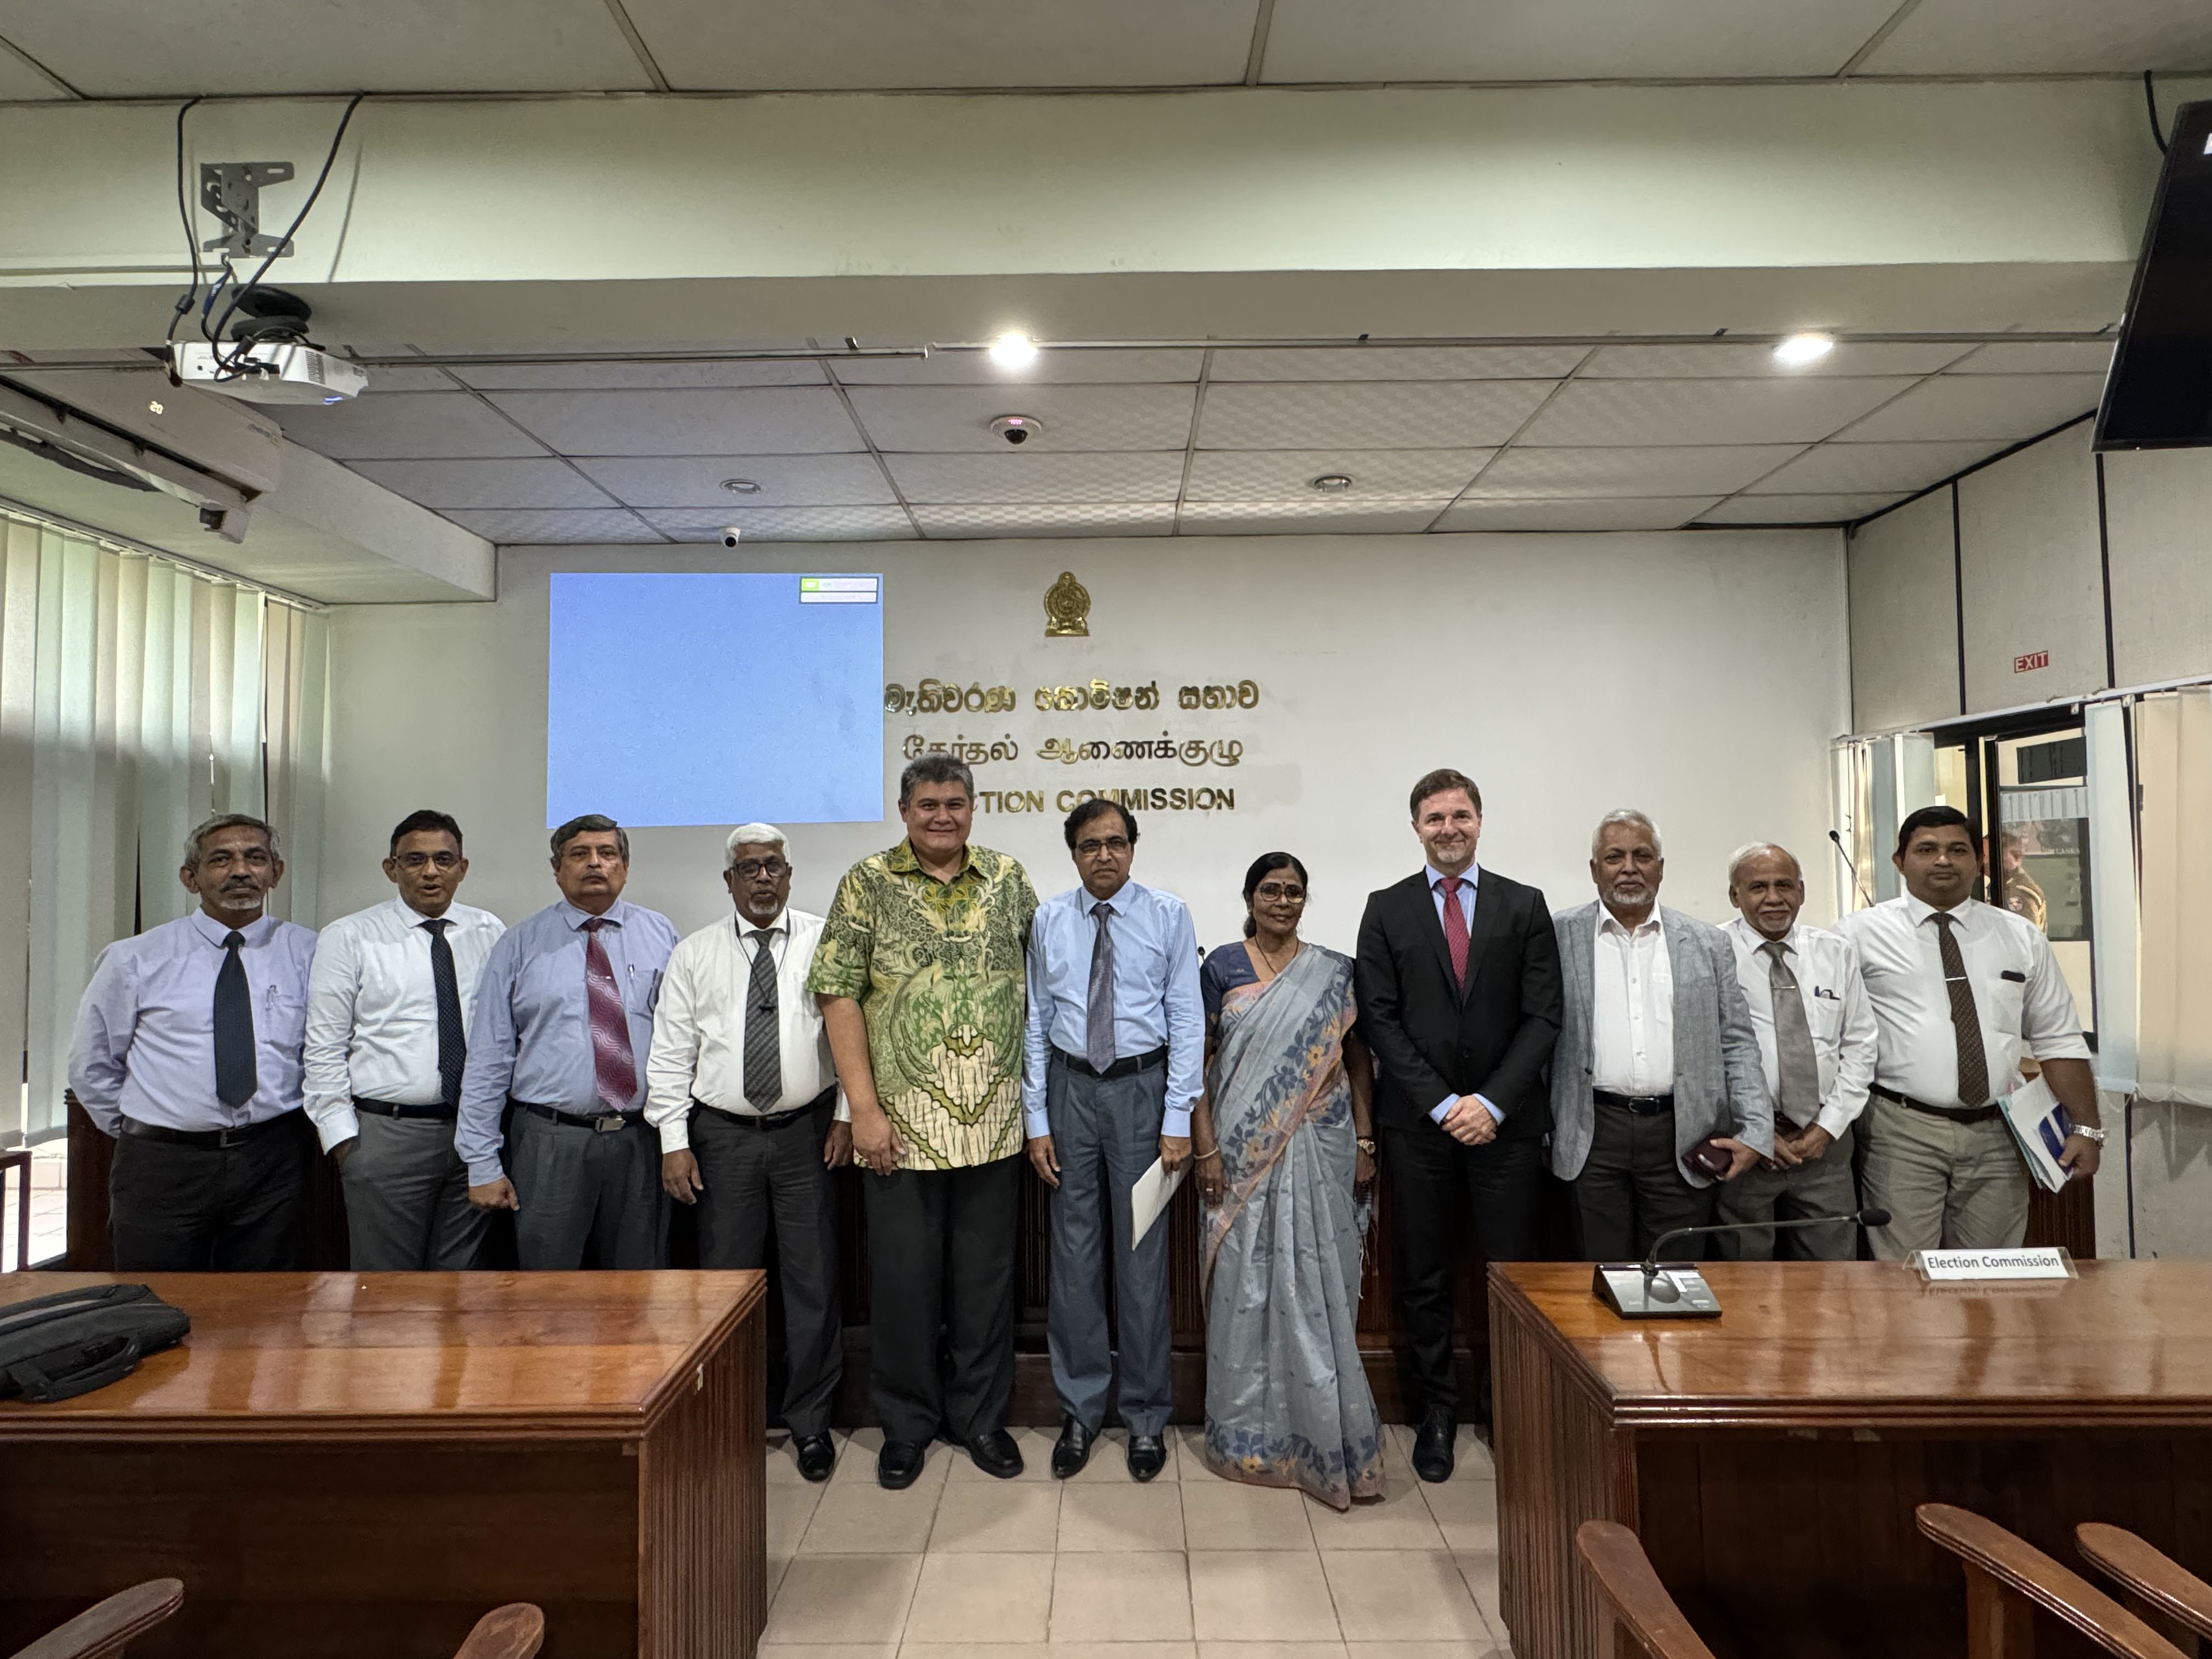 Group photo: Leadership of the Election Commission of Sri Lanka and International IDEA representatives